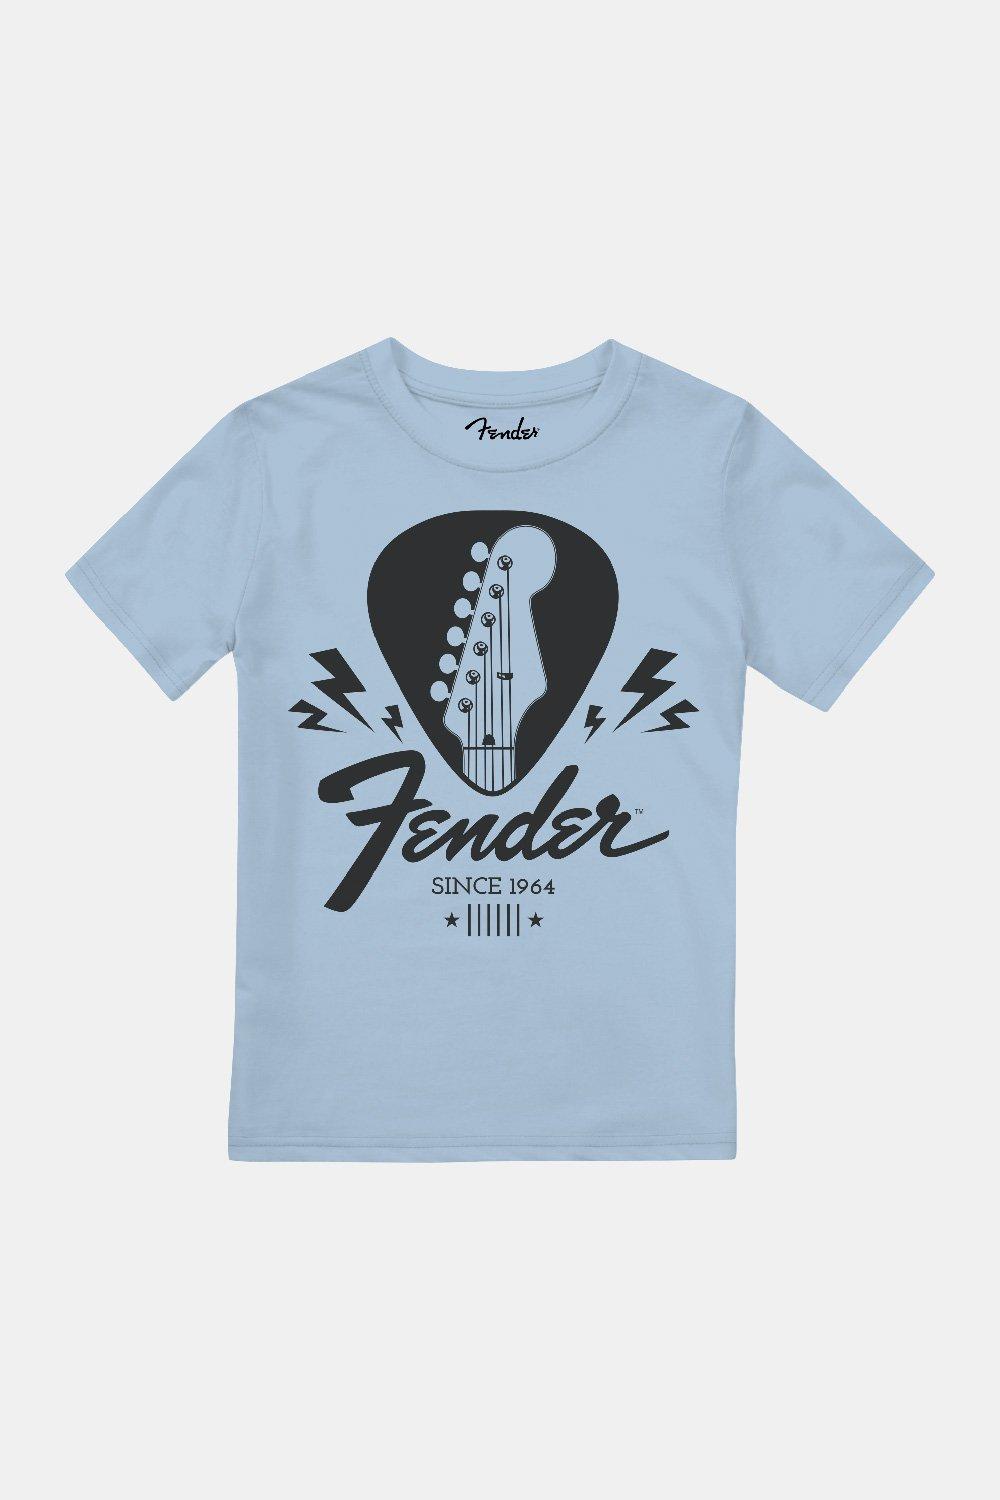 Guitar Pick Boys T-Shirt